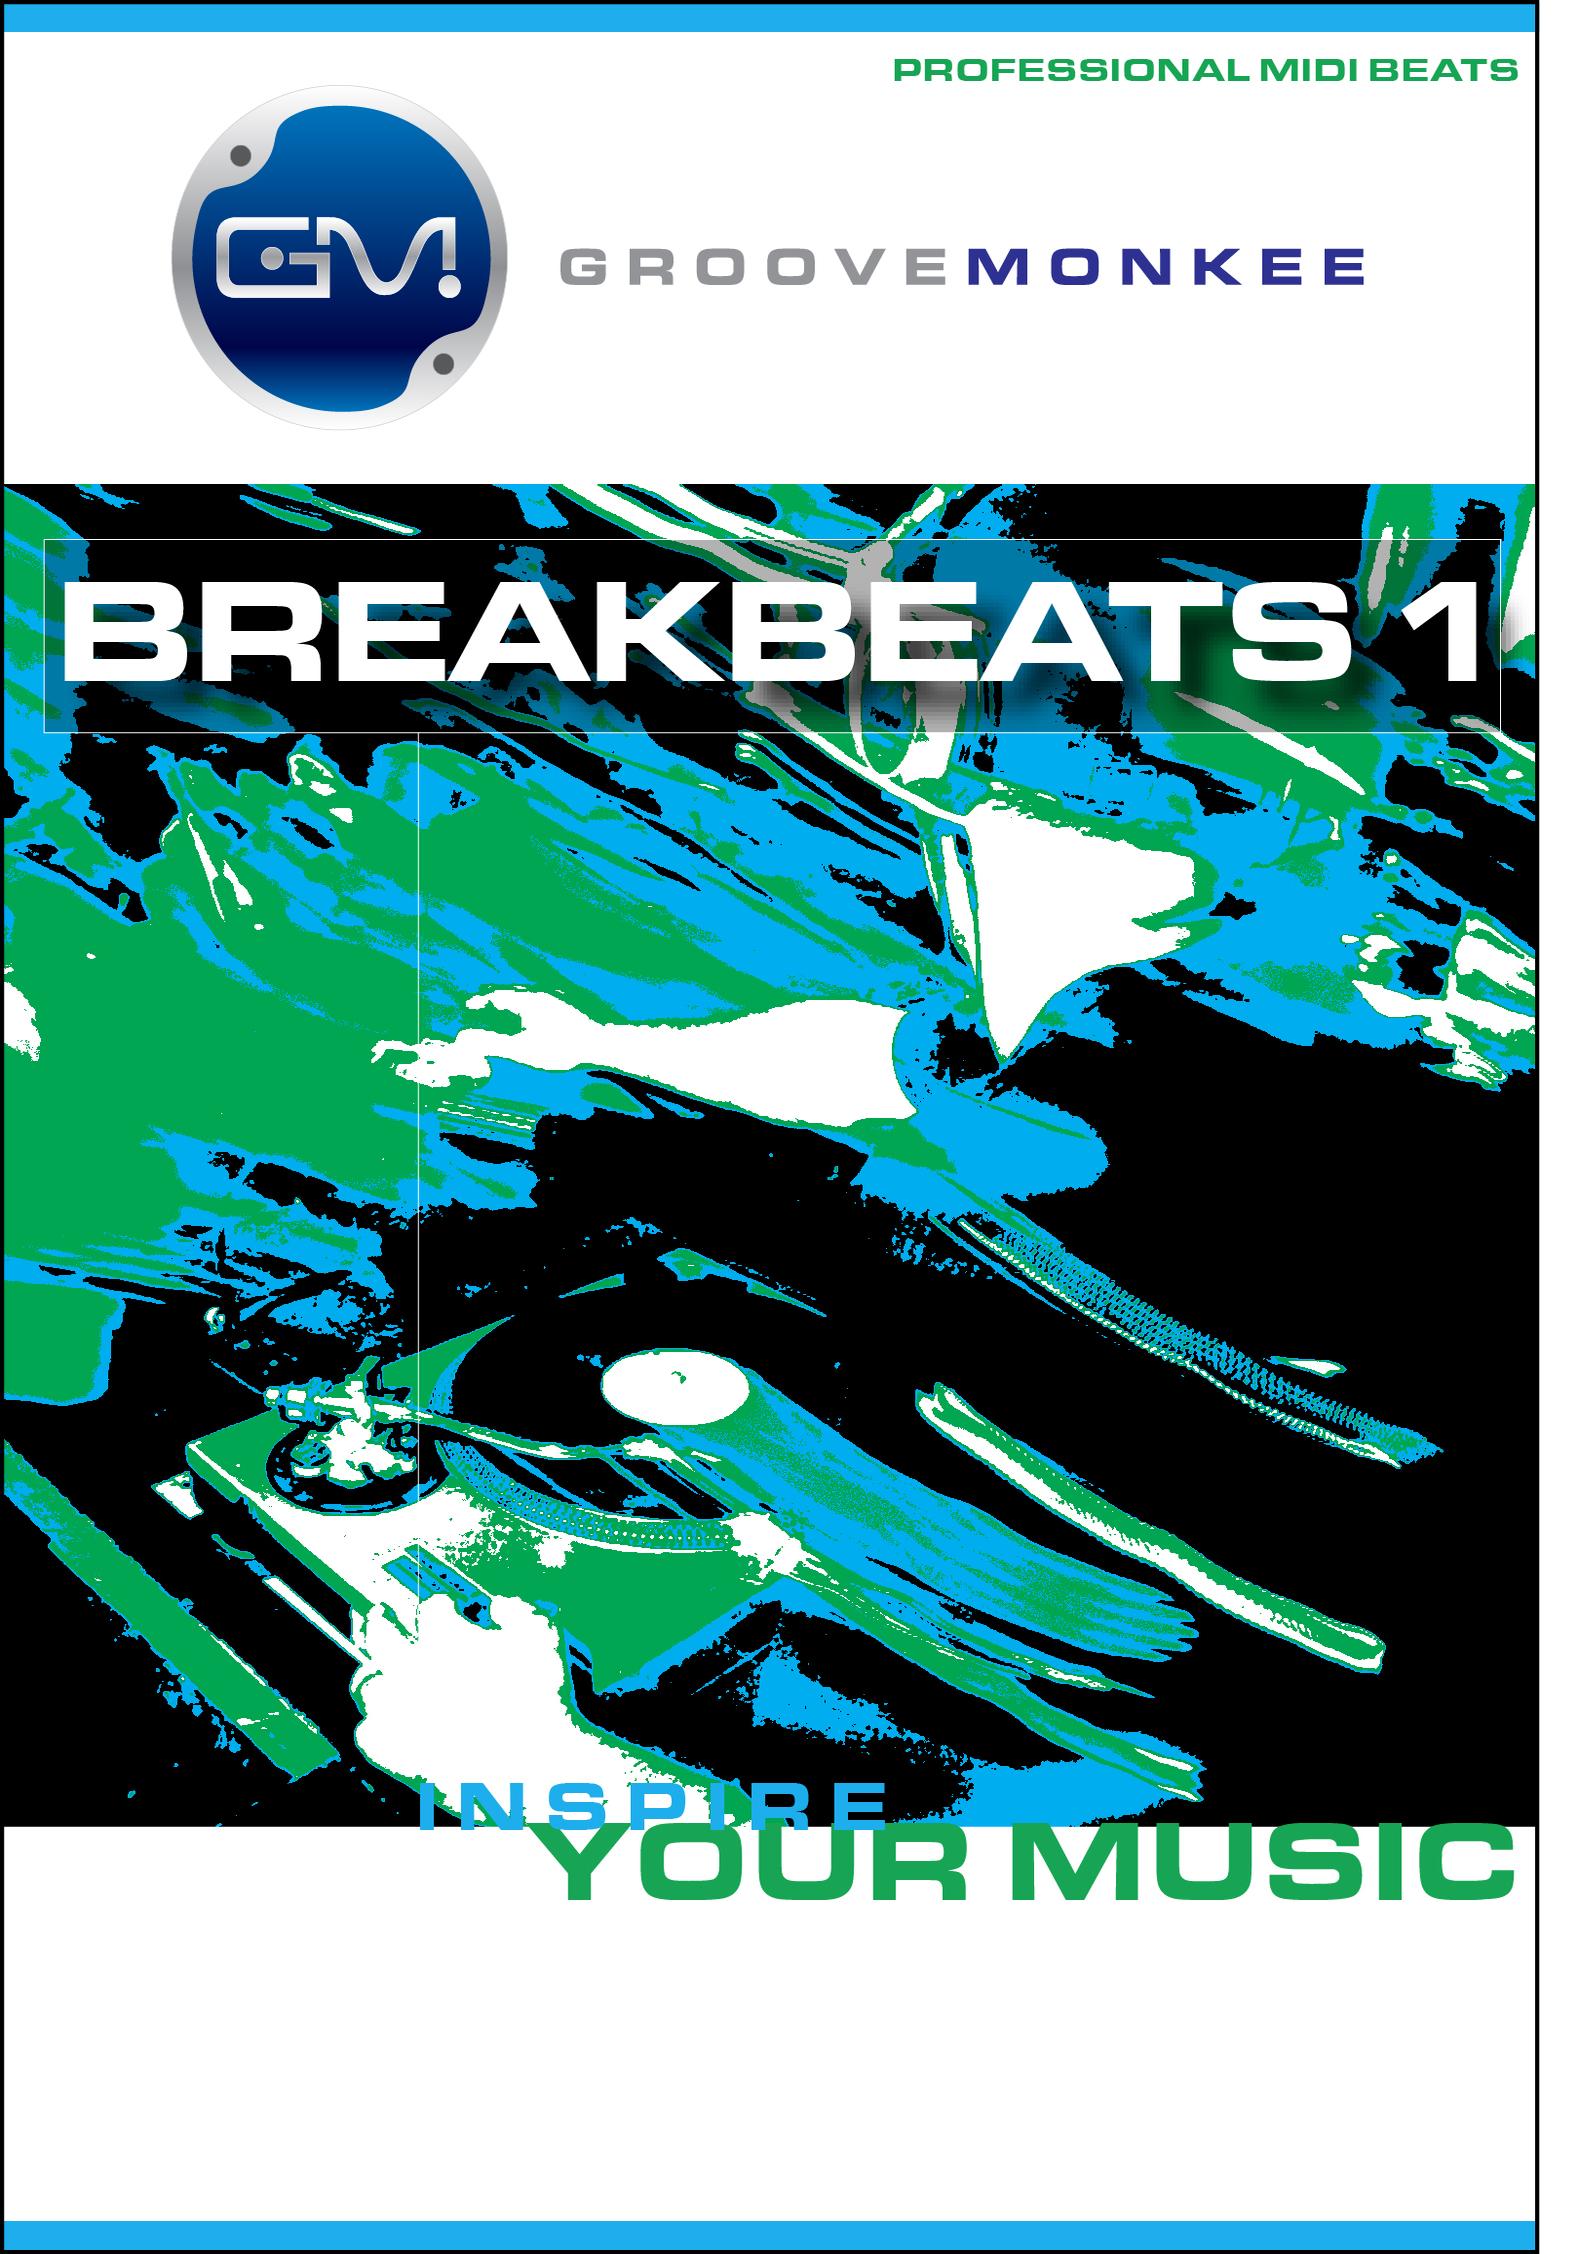 Breakbeat MIDI Drum Loops